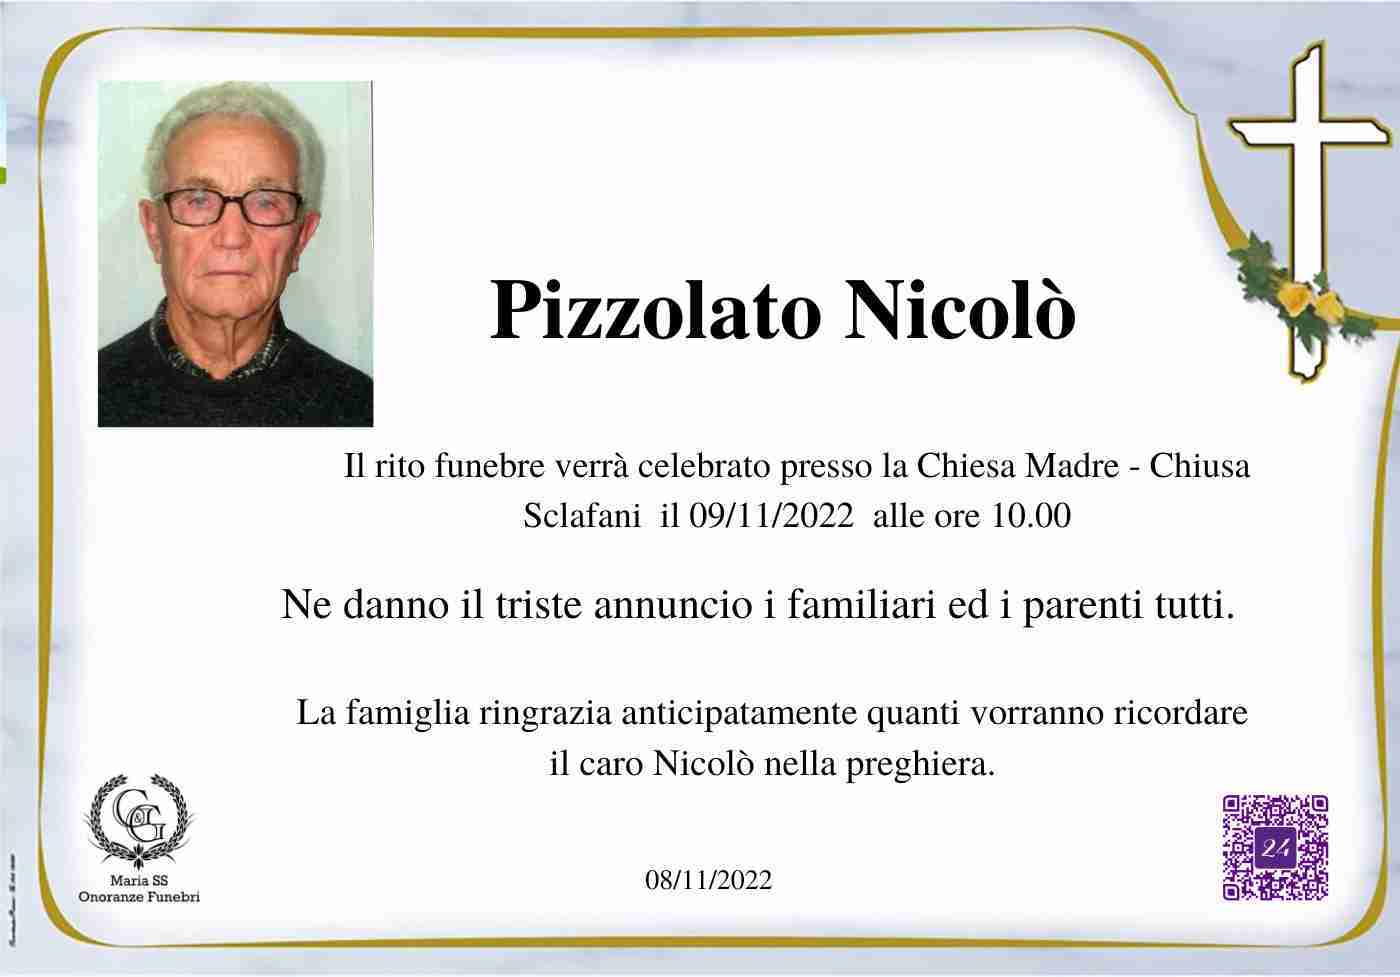 Nicolò Pizzolato